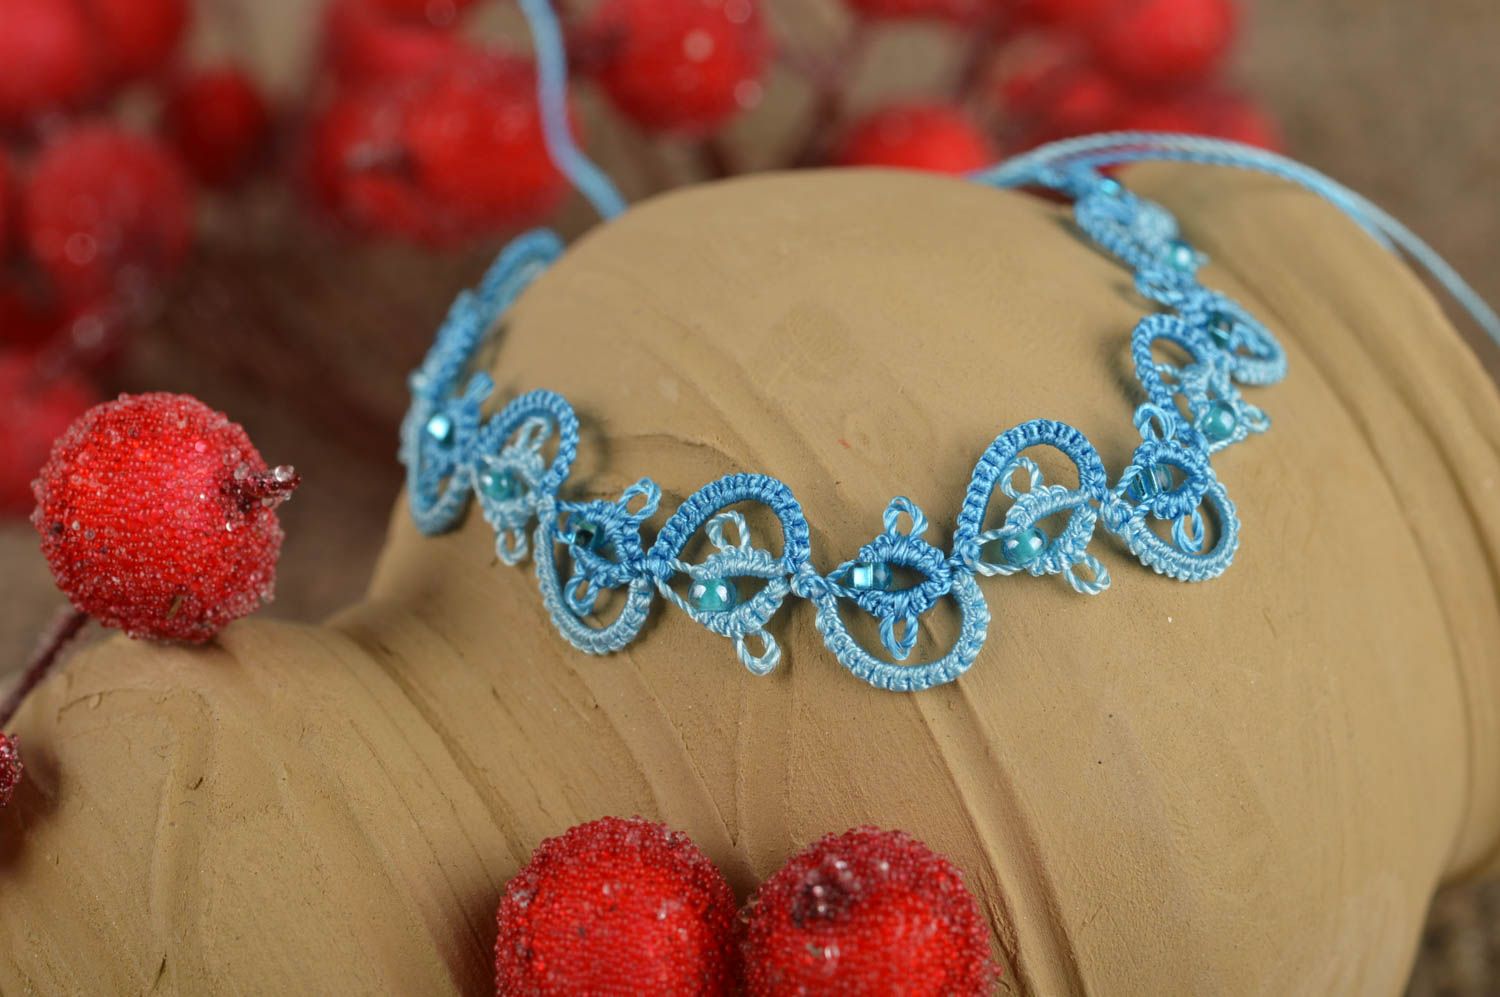 Beautiful handmade woven bracelet textile wrist bracelet designs gifts for her photo 1